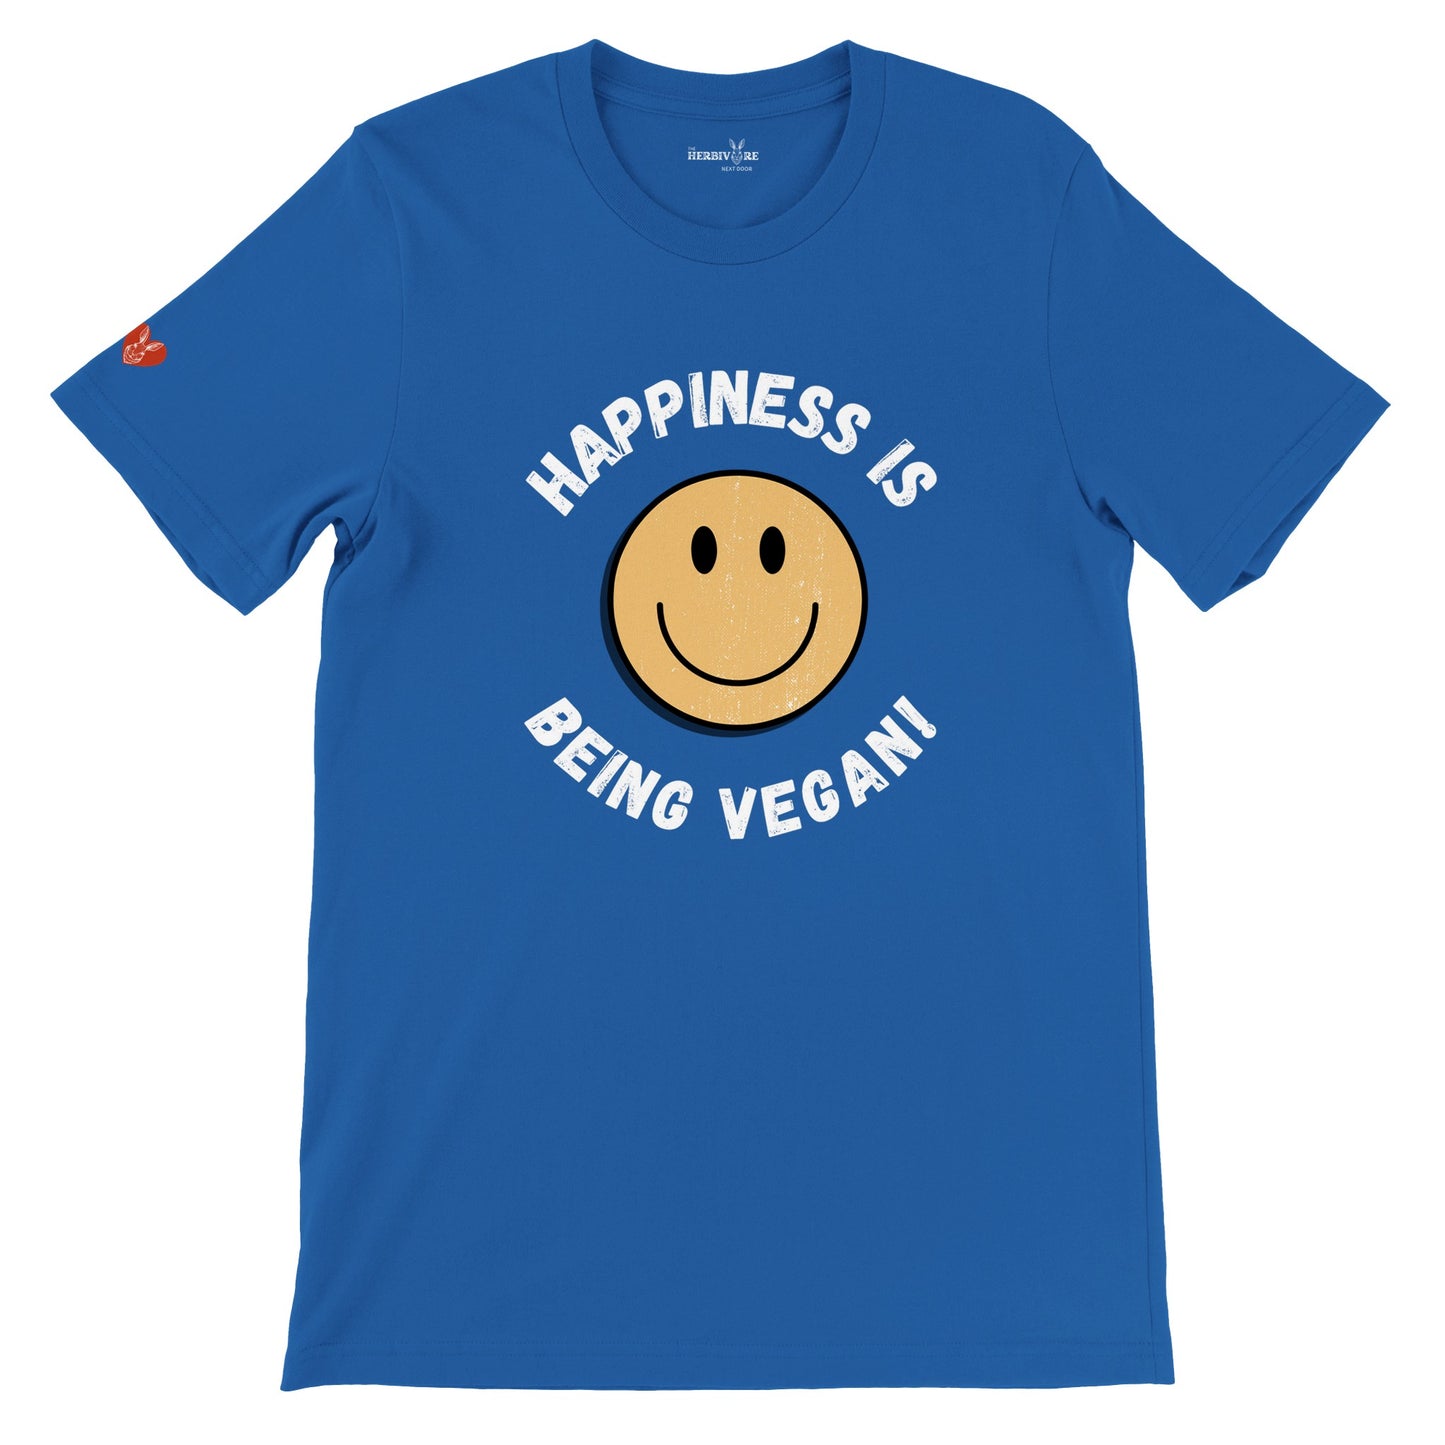 Happiness is - Unisex